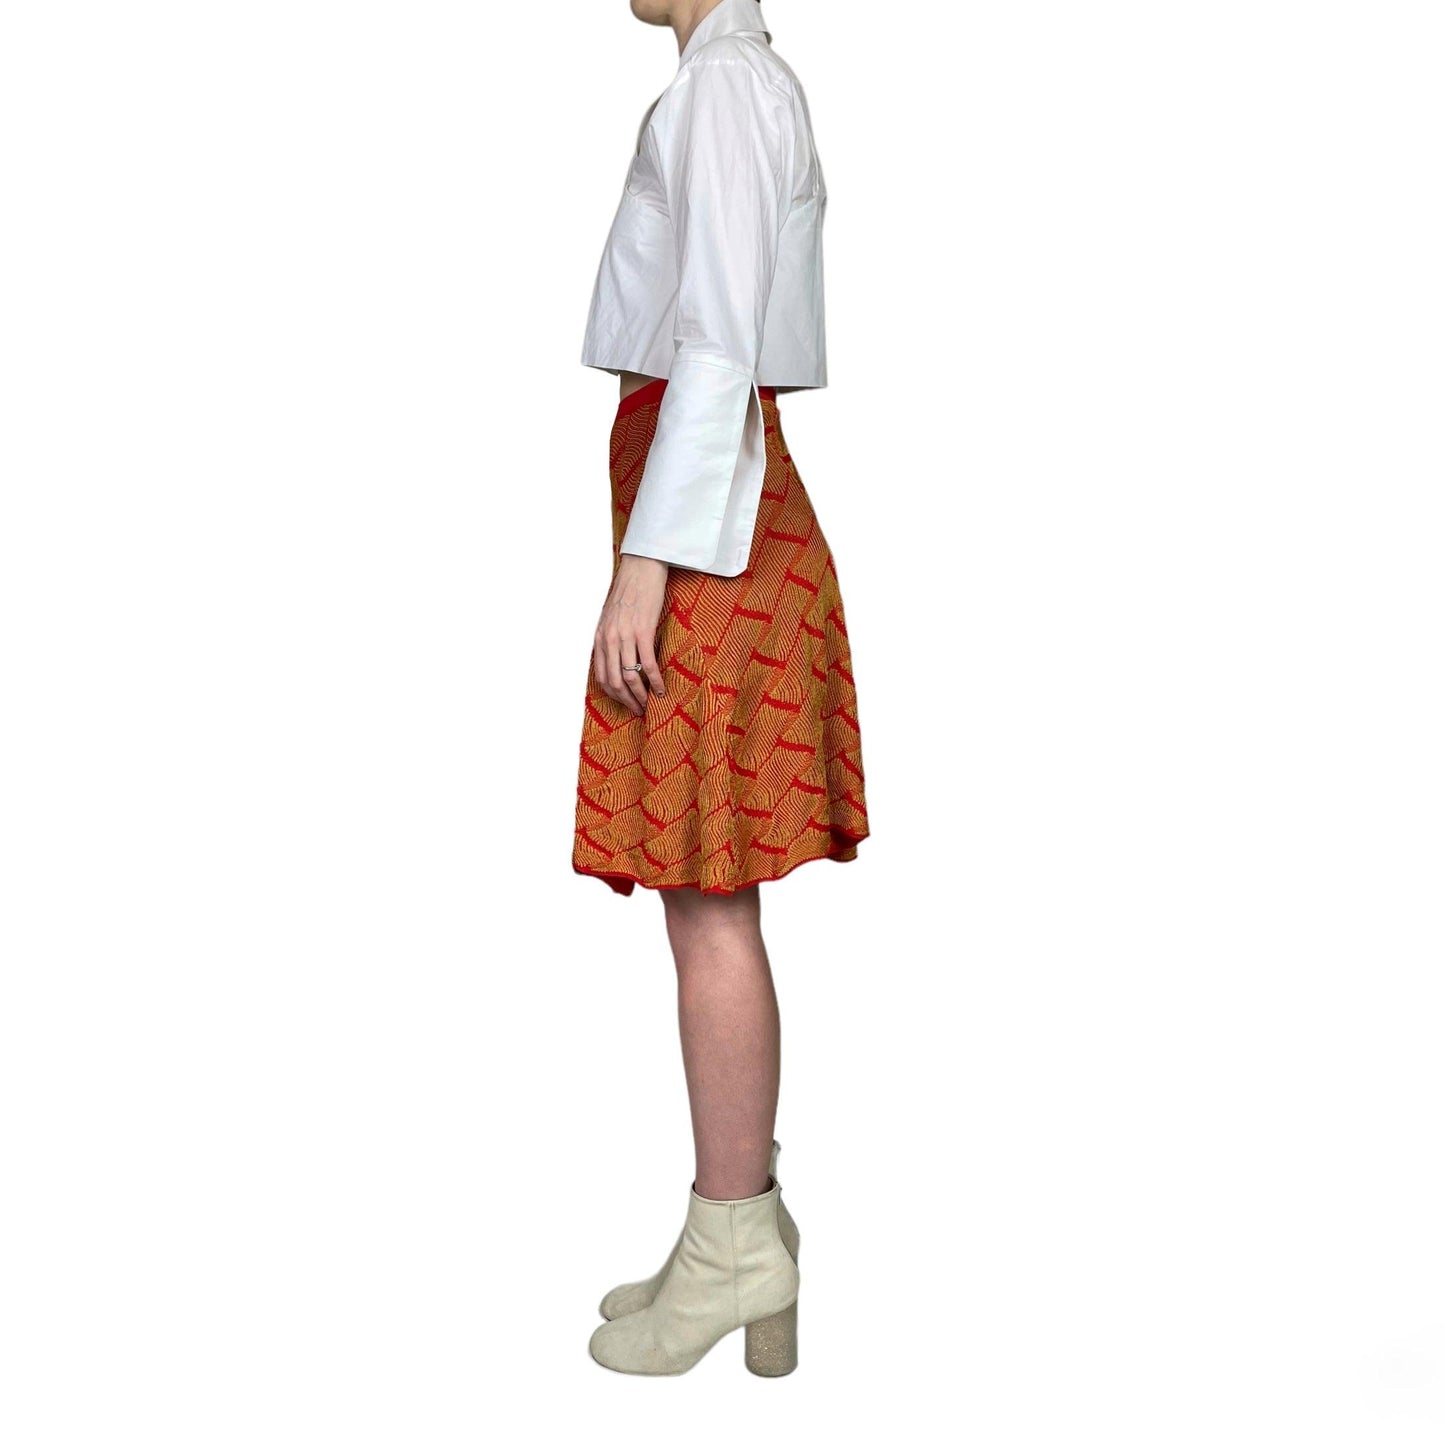 c.2018 Vivienne Westwood knit skirt - Known Source